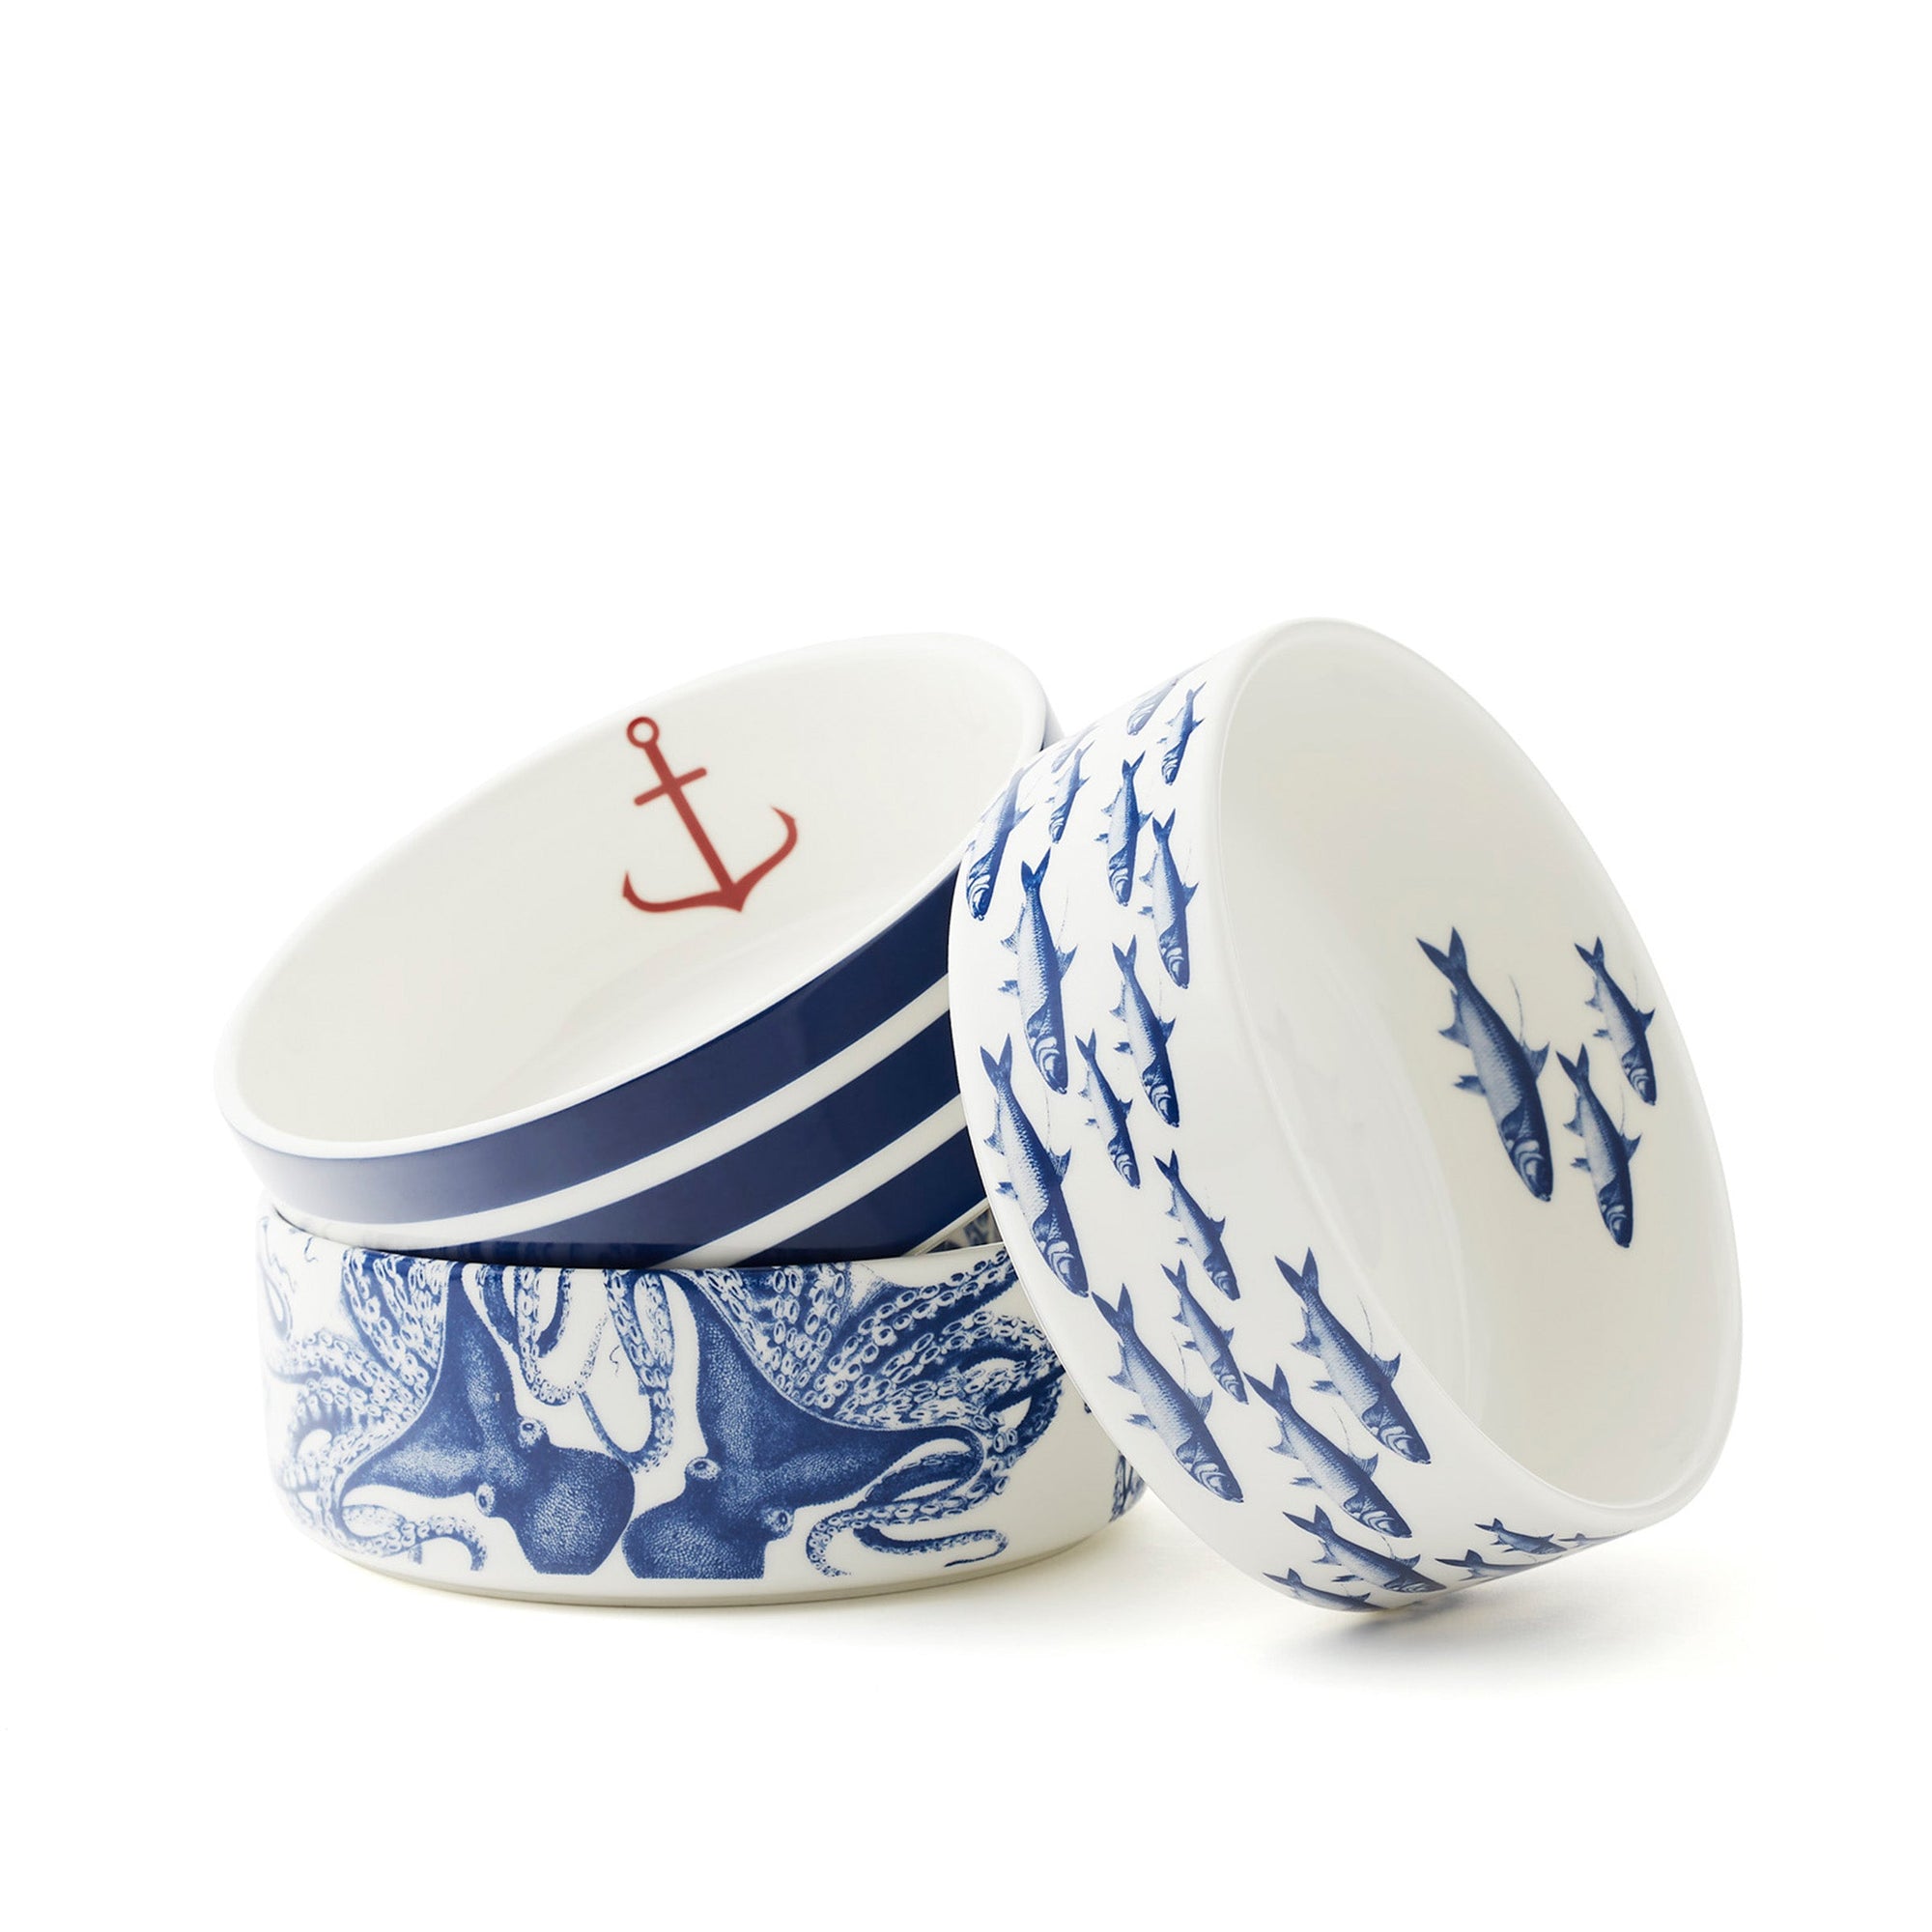 Lucy the octopus blue and white premium porcelain medium pet bowl from Caskata.